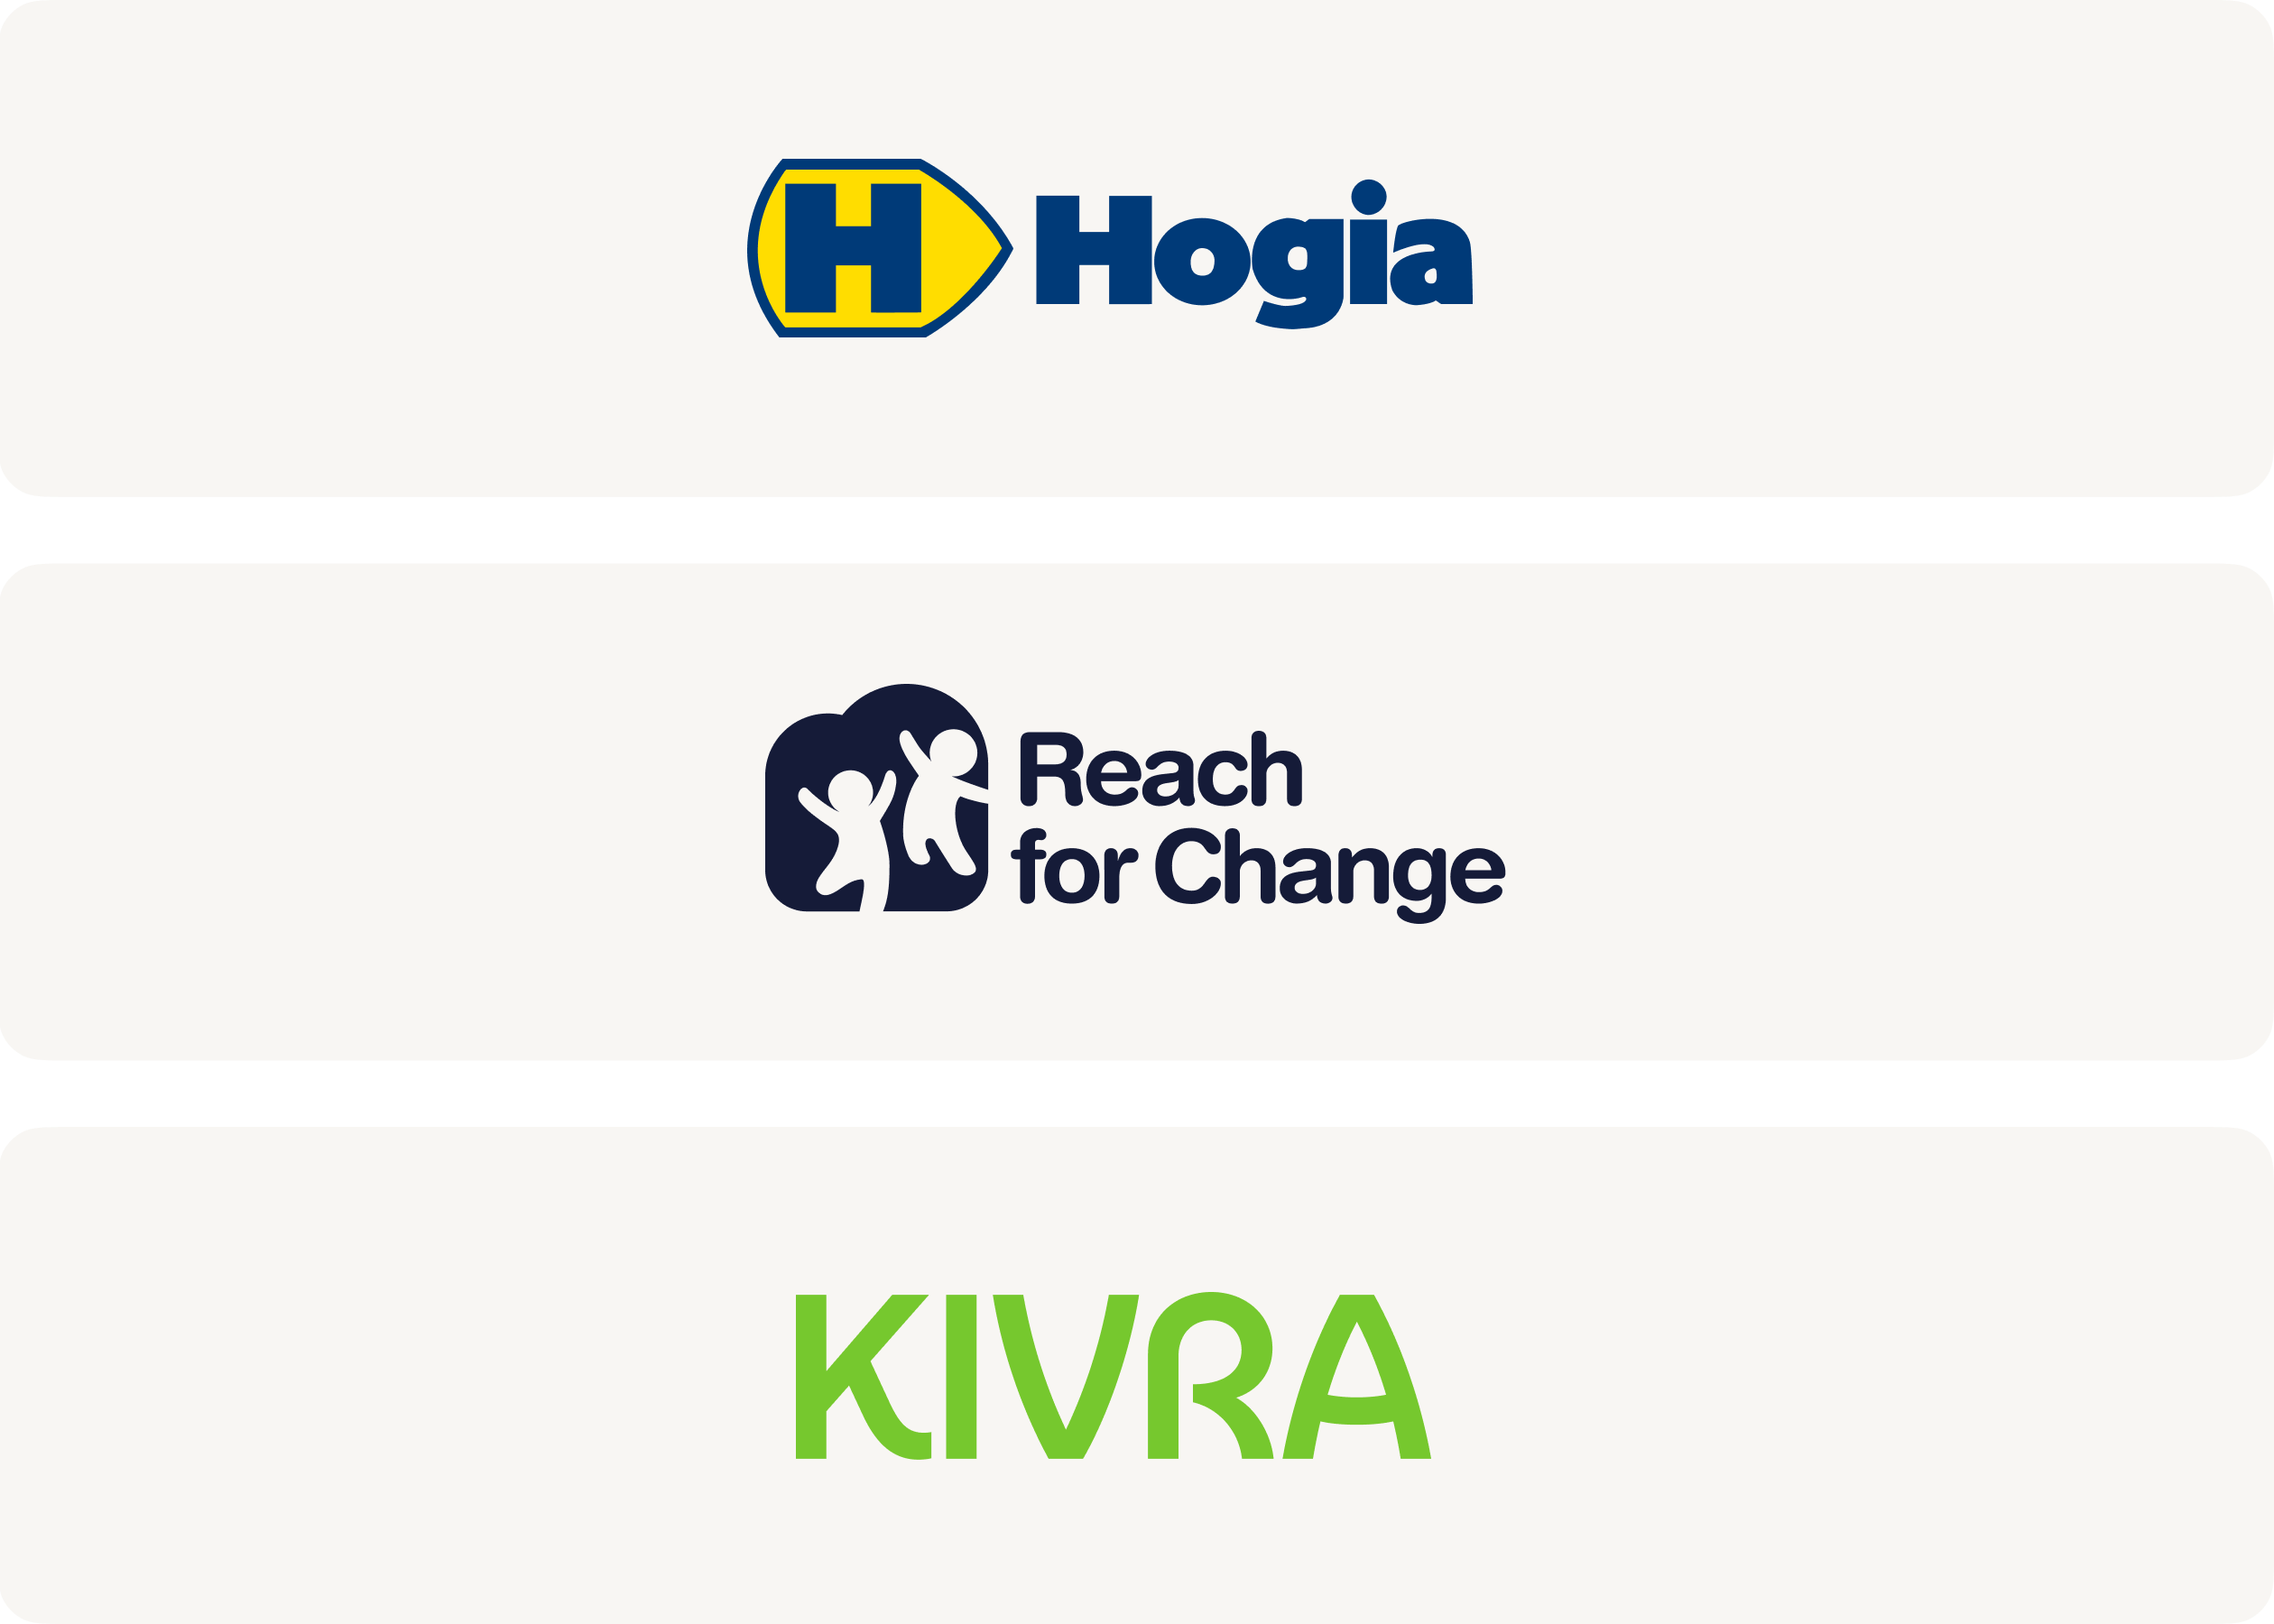 reach for change – hogia/kivra